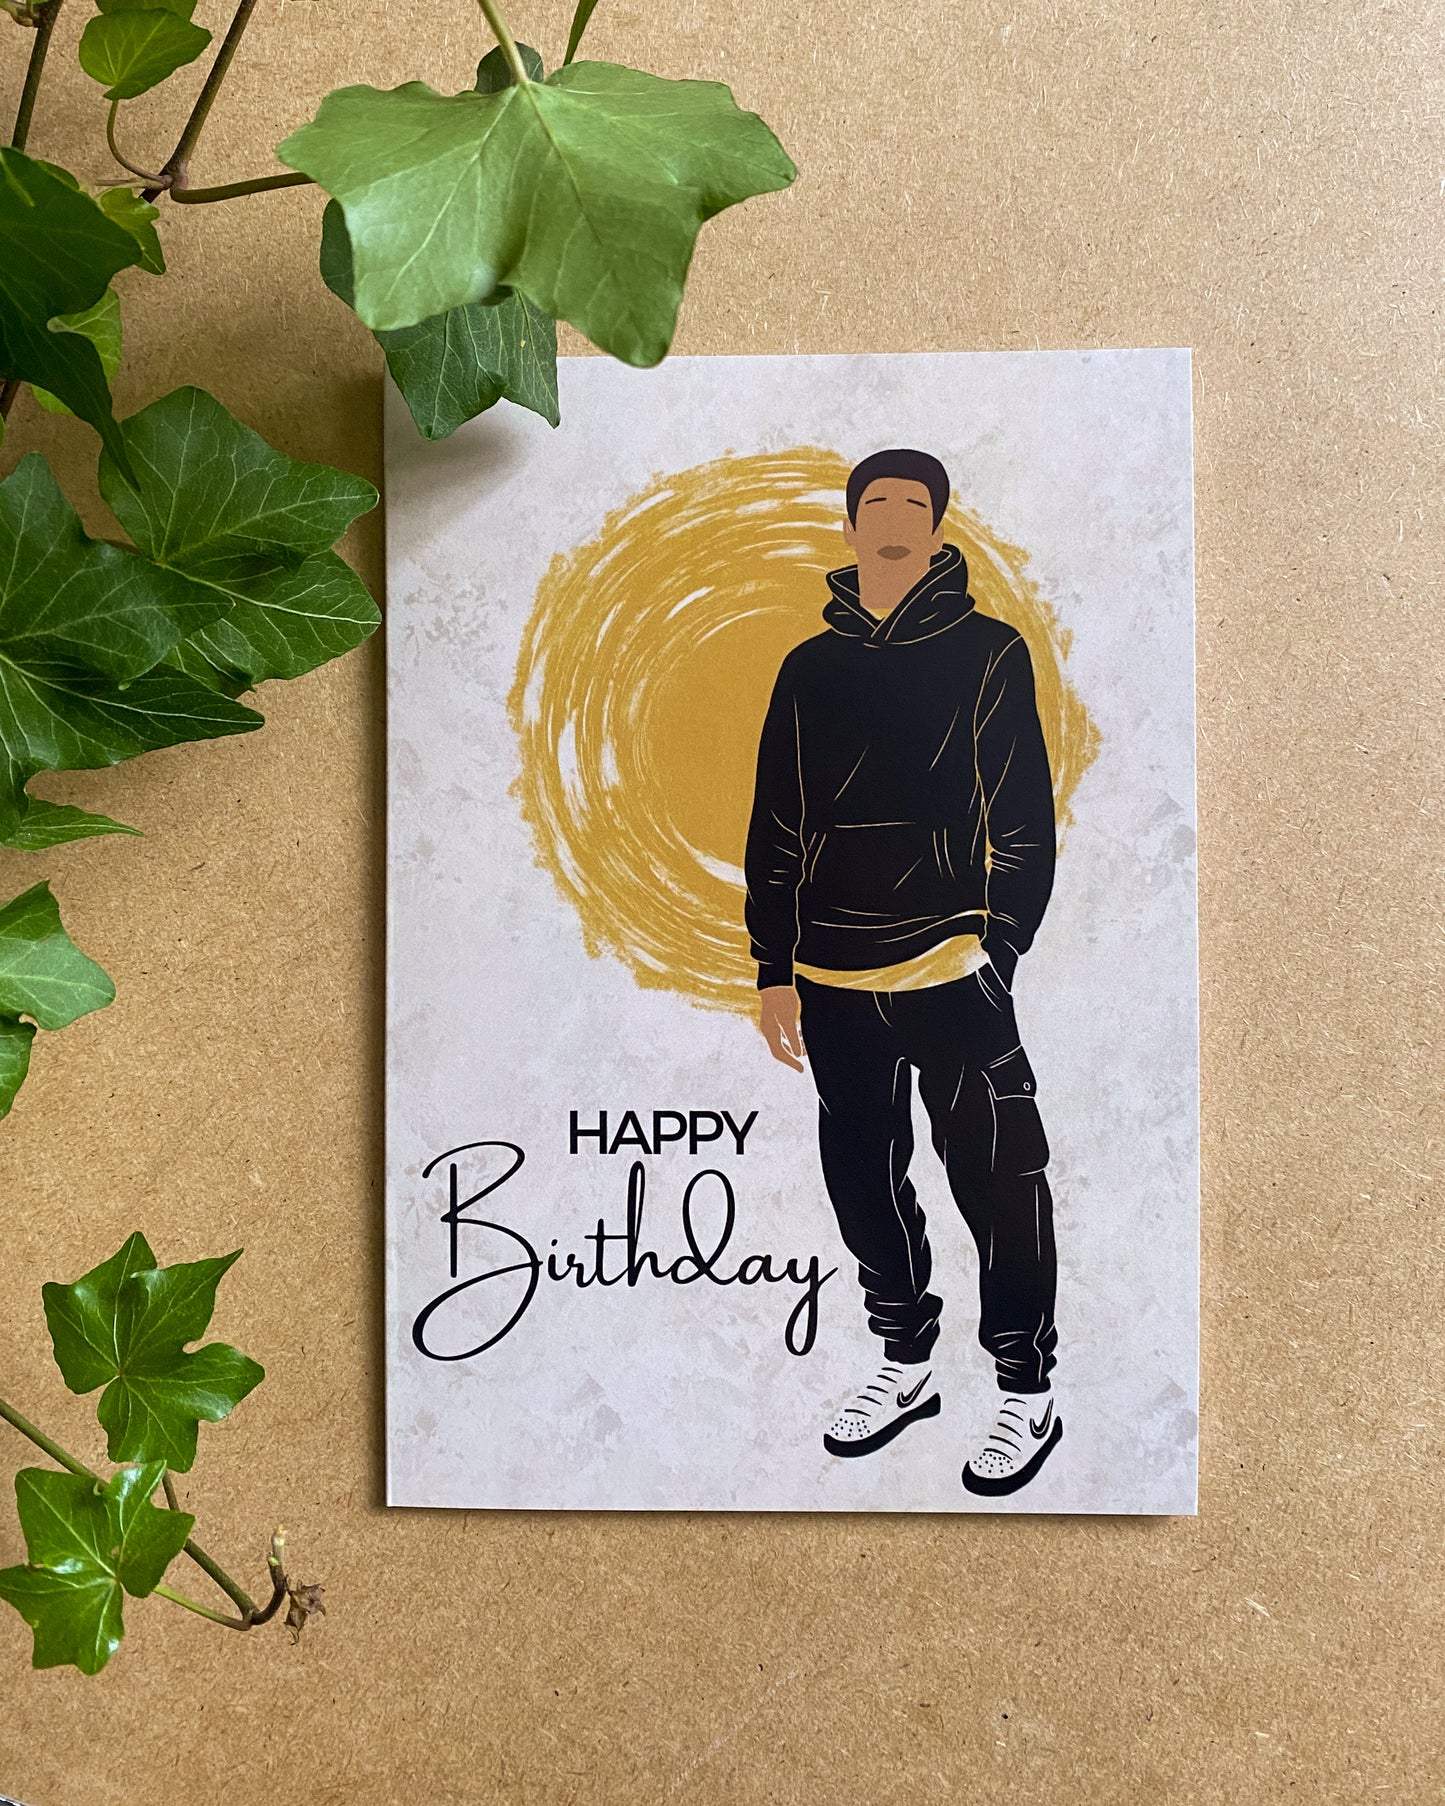 Blake’s Happy Birthday Birthday Black Boy / Man Card.